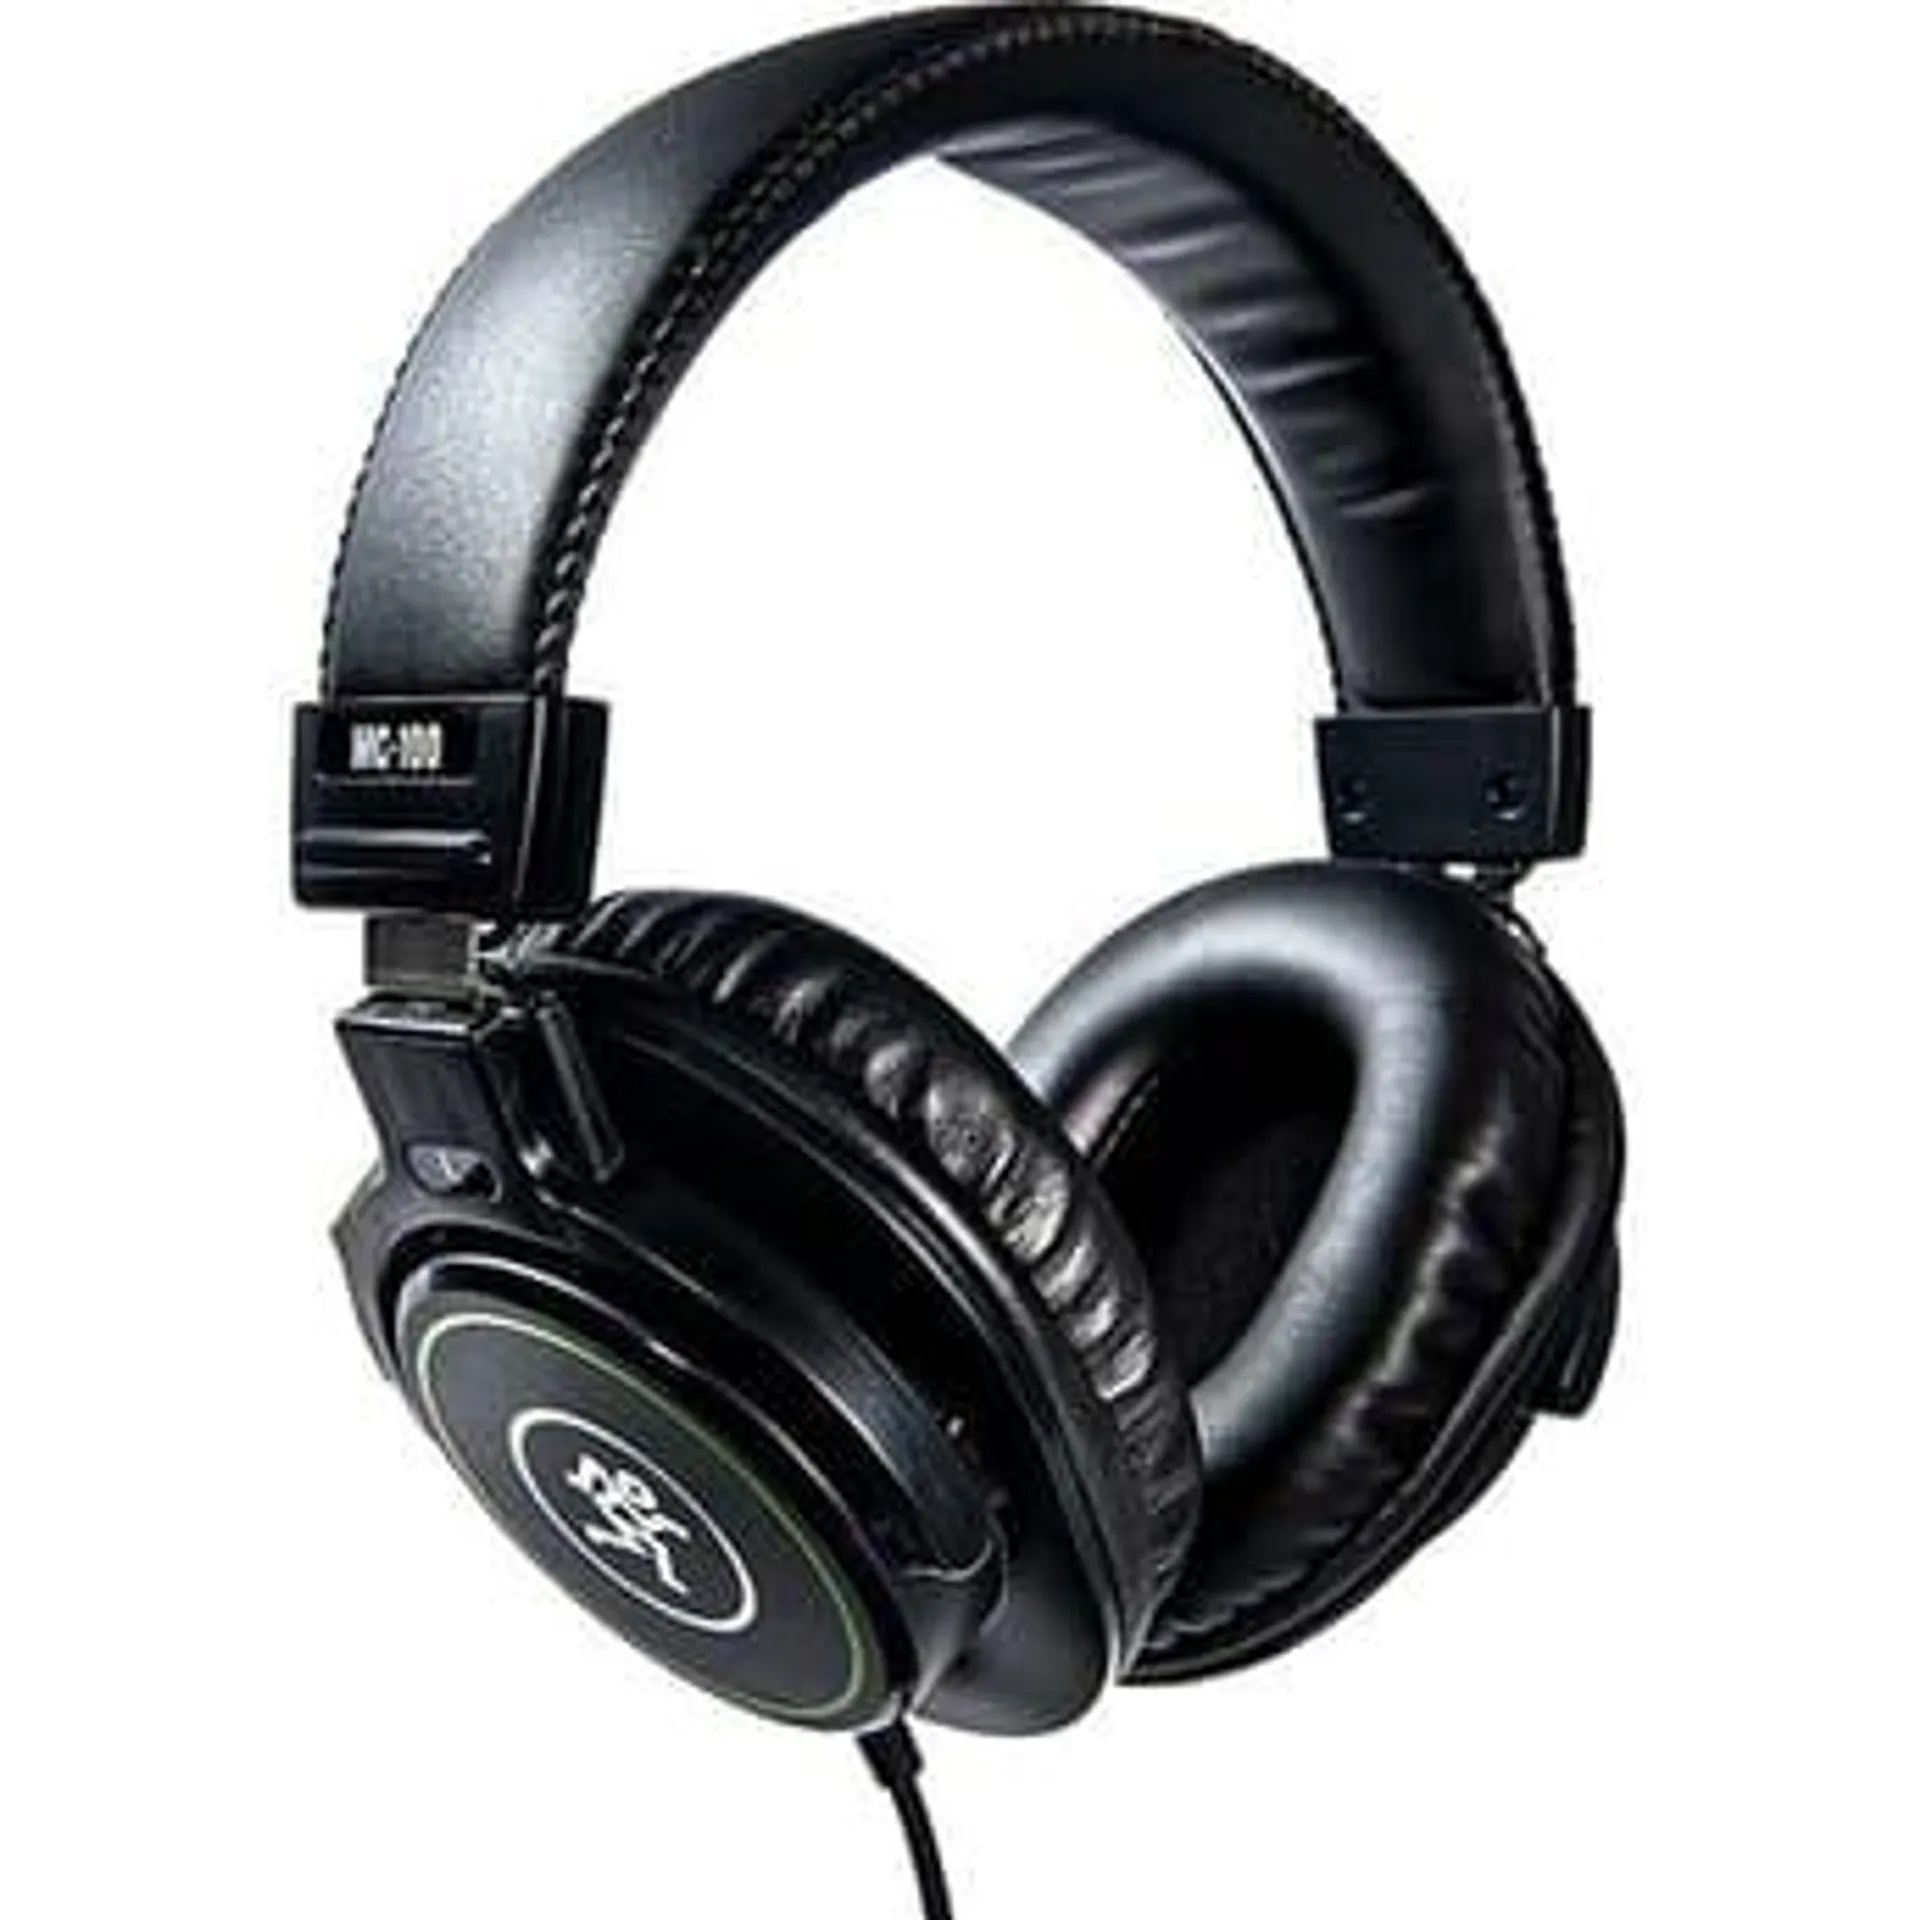 Mackie MC-100 Professional Closed-Back Over-Ear Headphones